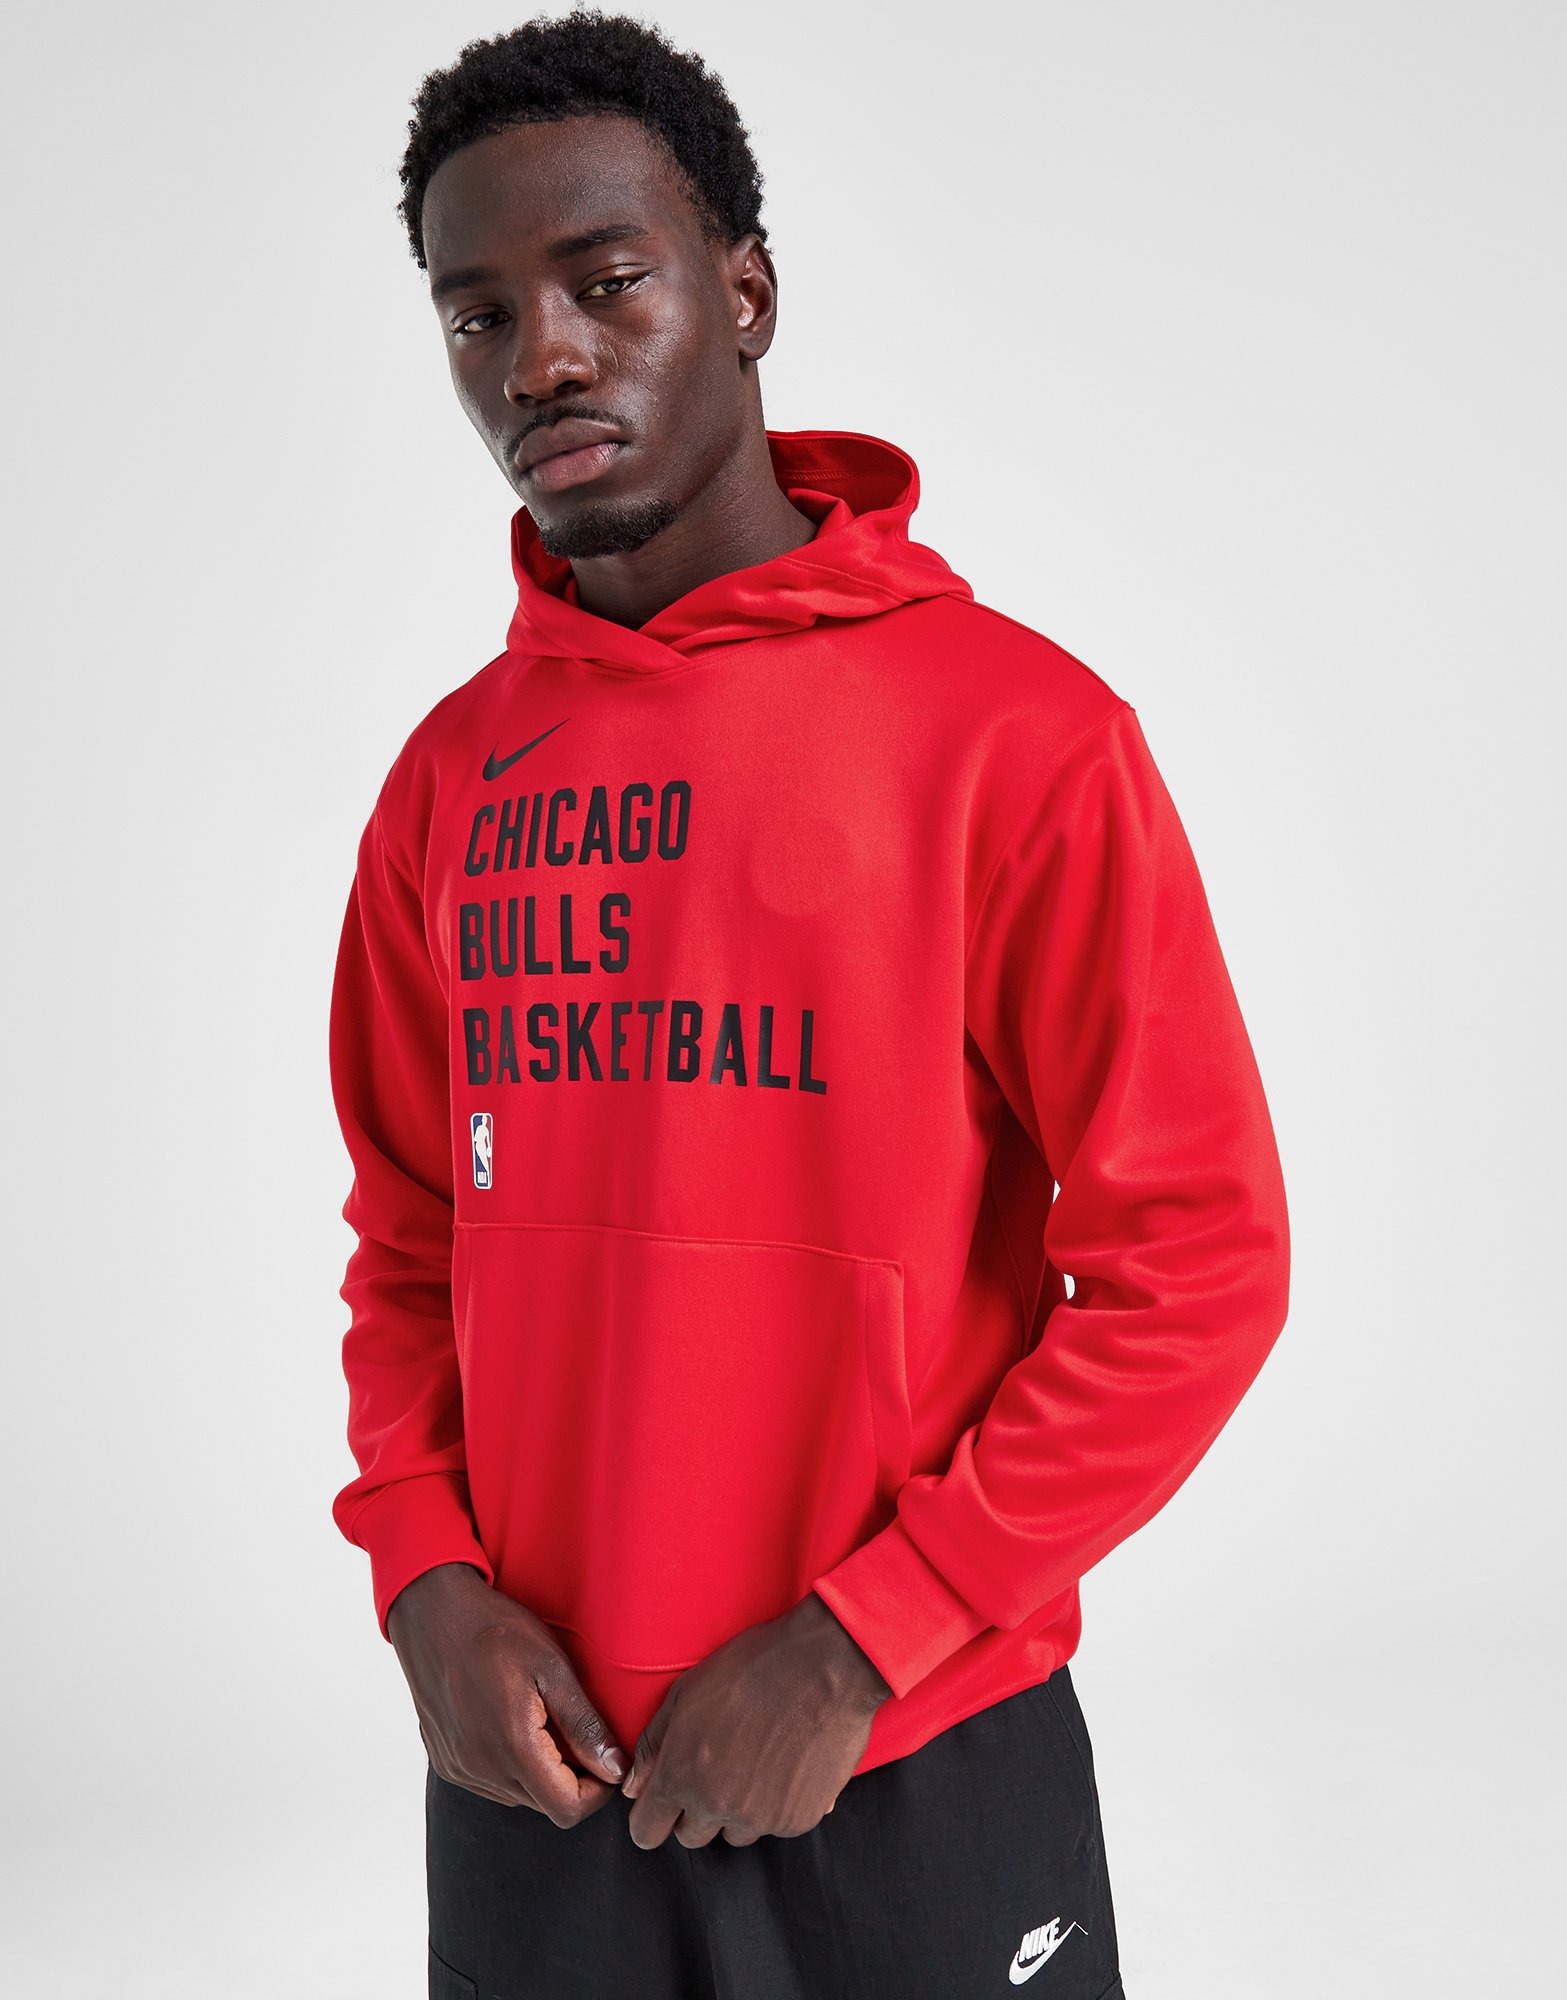 Chicago Bulls Spotlight Men's Nike Dri-FIT NBA Pullover Hoodie.